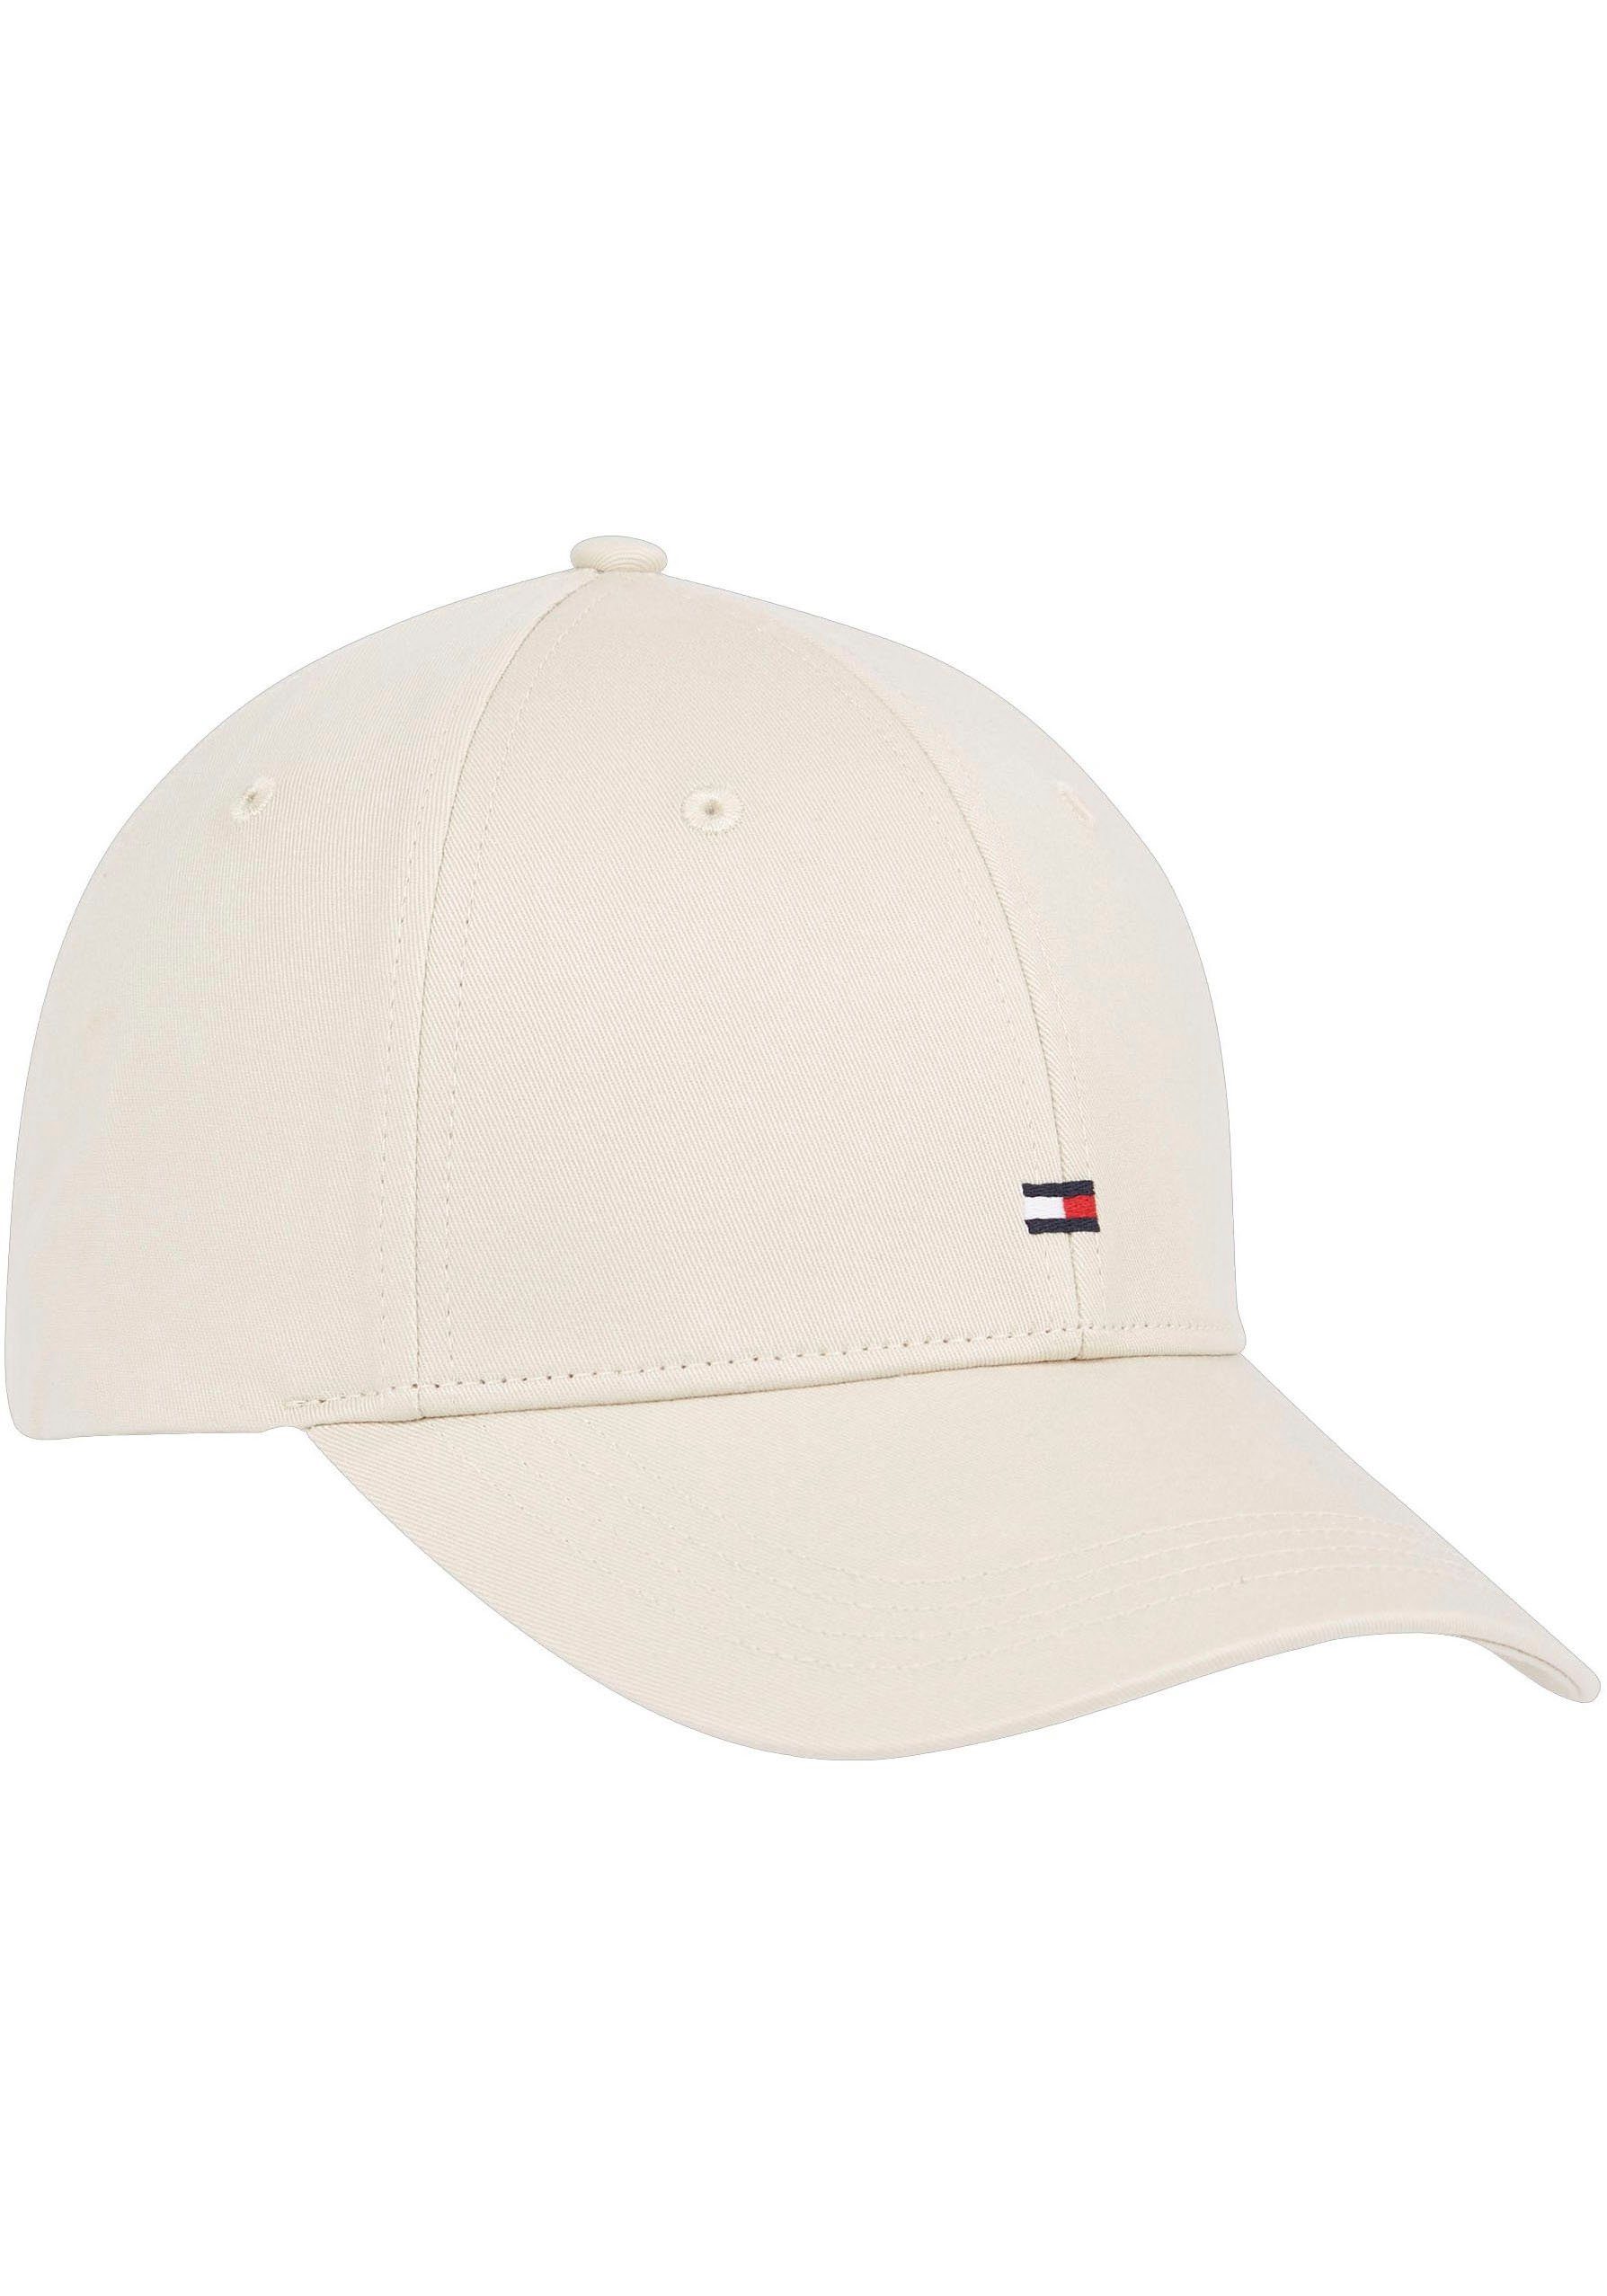 Baseball mit CAP TH aufgesticktem Classic Beige FLAG Logo-Branding Hilfiger Cap Tommy Cap